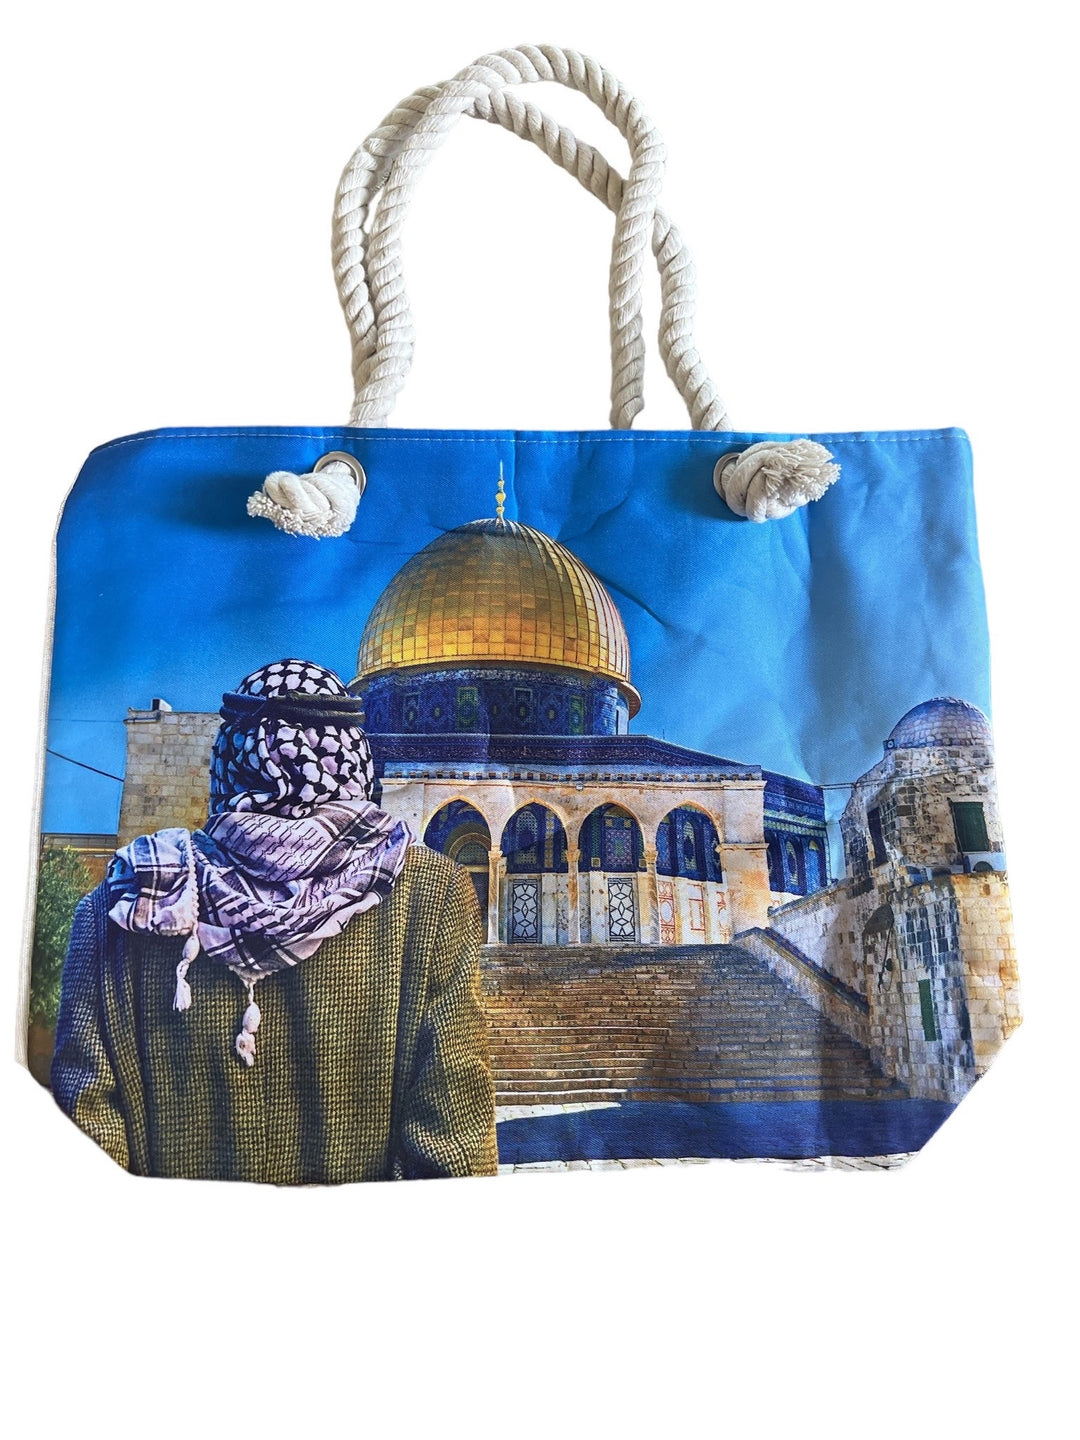 Al-Aqsa Essence Tote: Limited Edition Sacred Site Bag